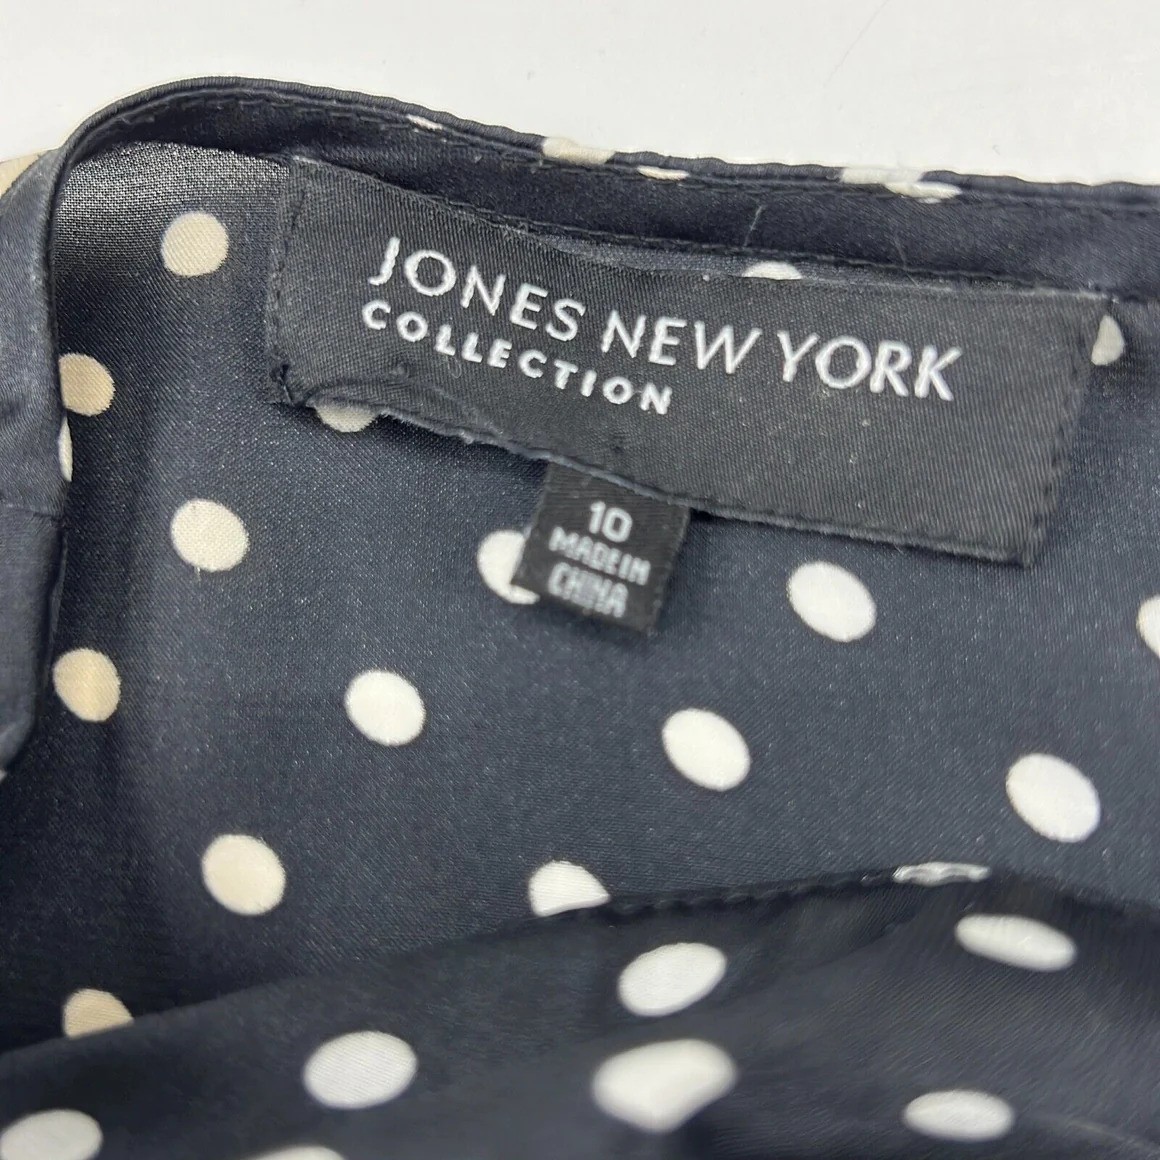 Jones New York label on a black polka dot blouse